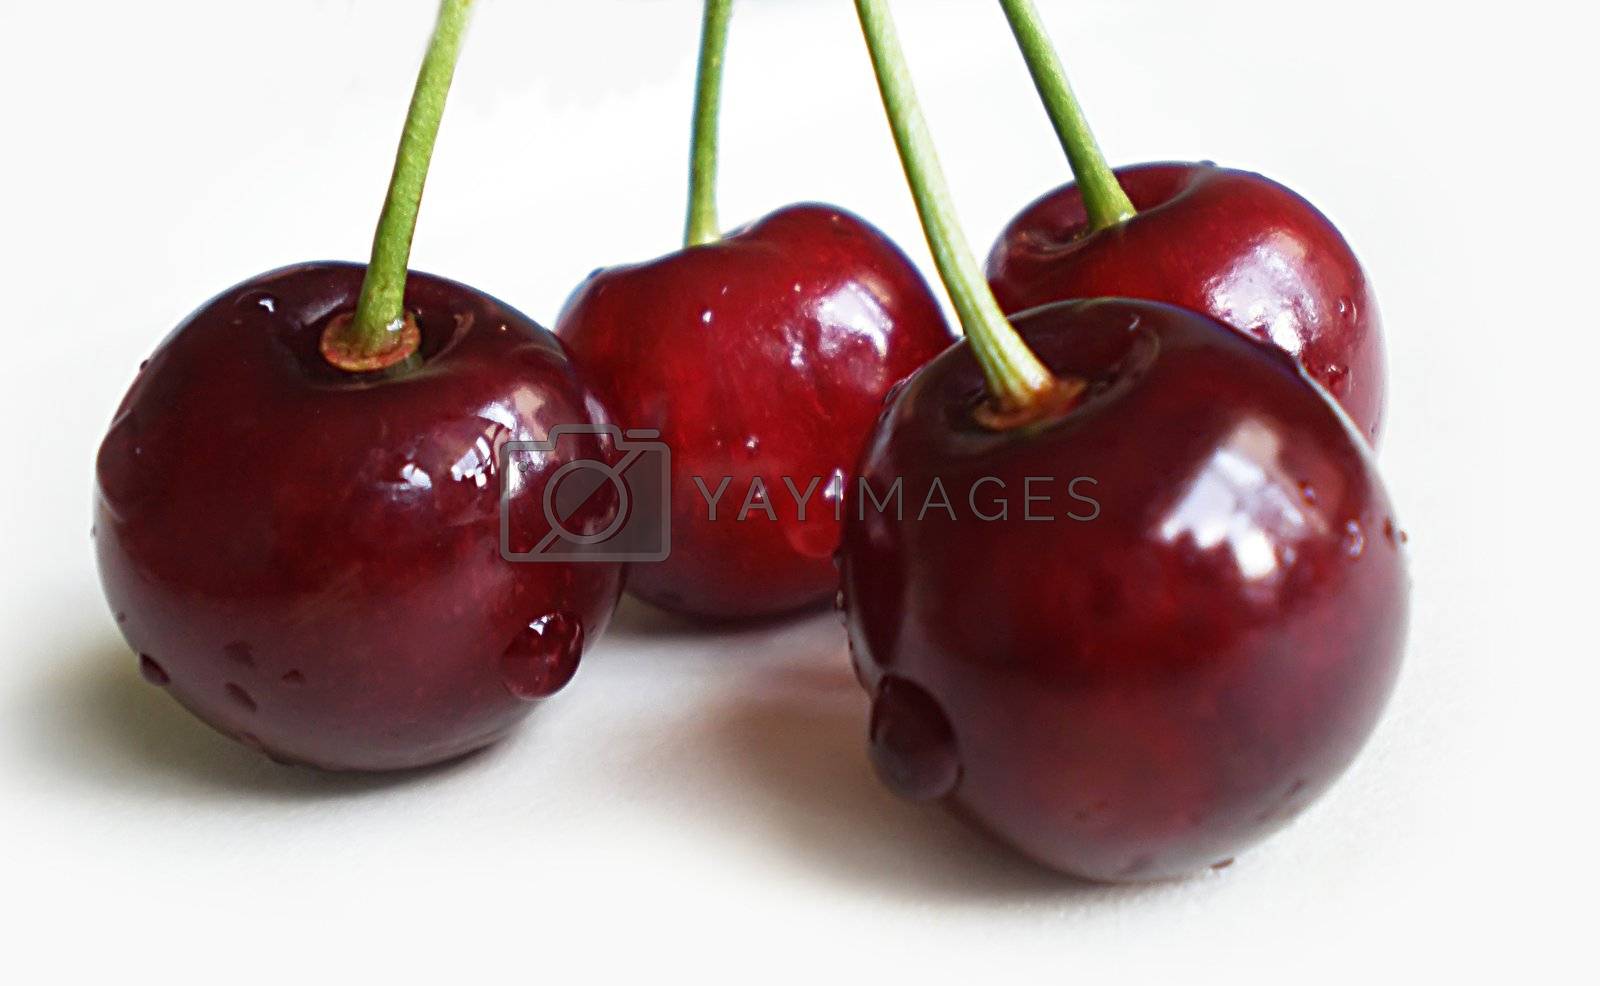 Royalty free image of cherries by Dessie_bg